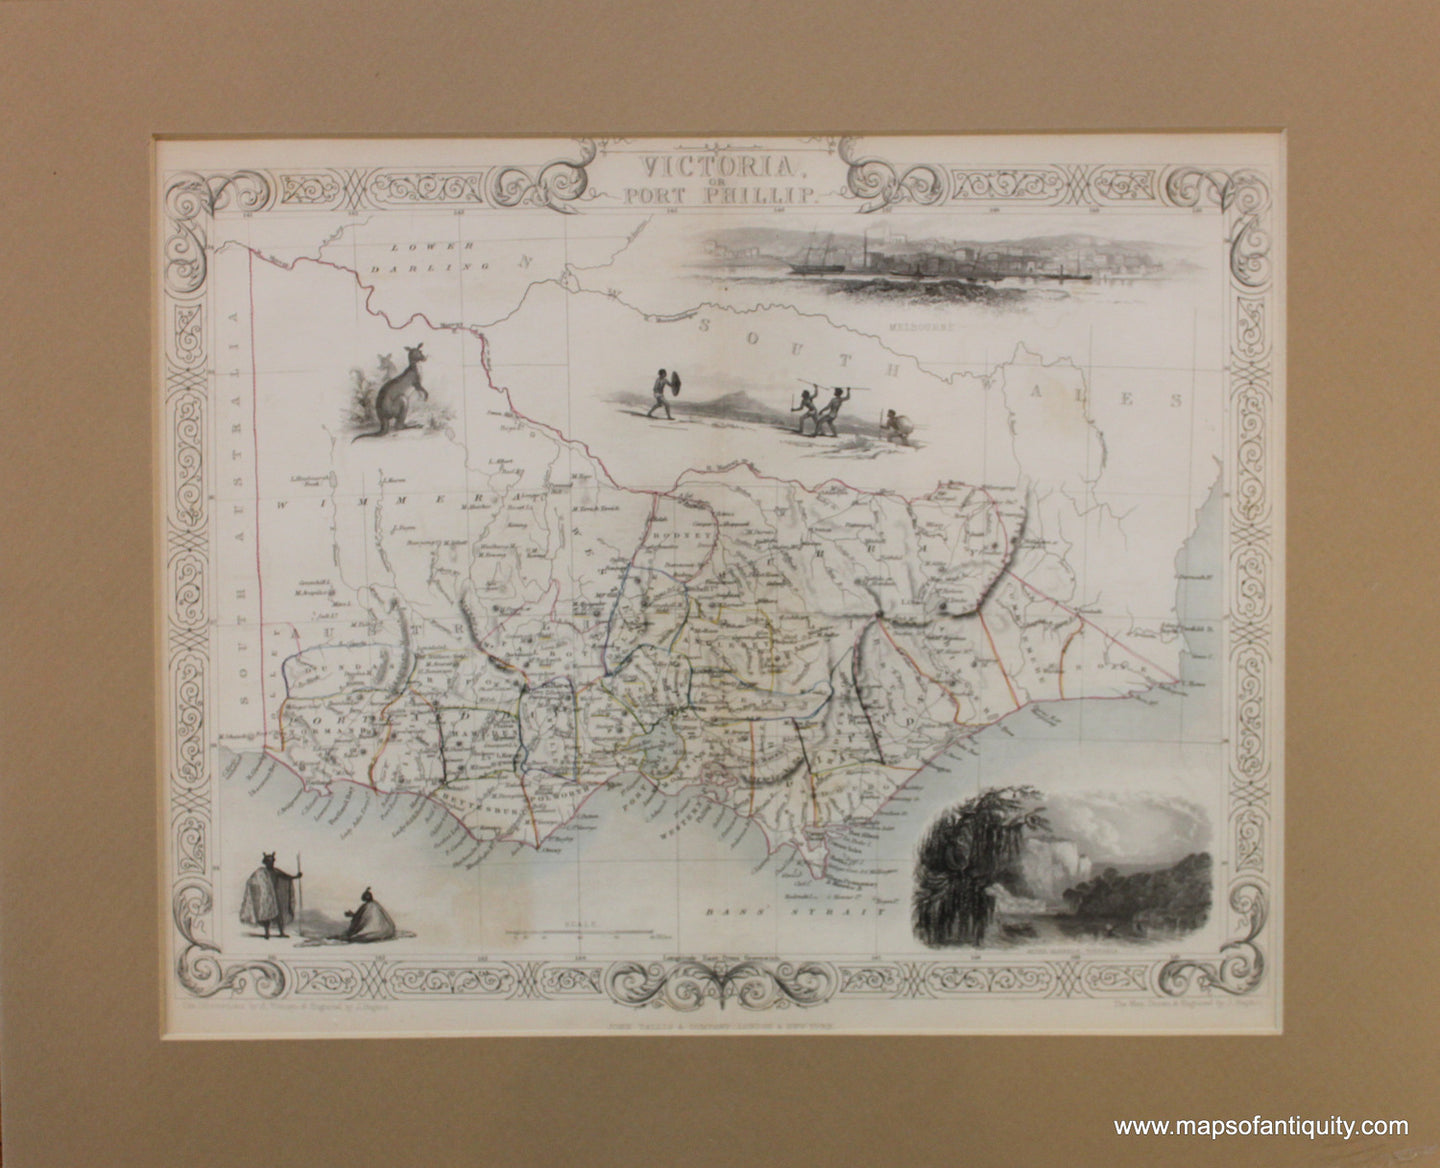 Antique-Hand-Colored-Map-Victoria-or-Port-Phillip-Australia-&-Pacific--c.-1860-Rapkin-and-Tallis-Maps-Of-Antiquity